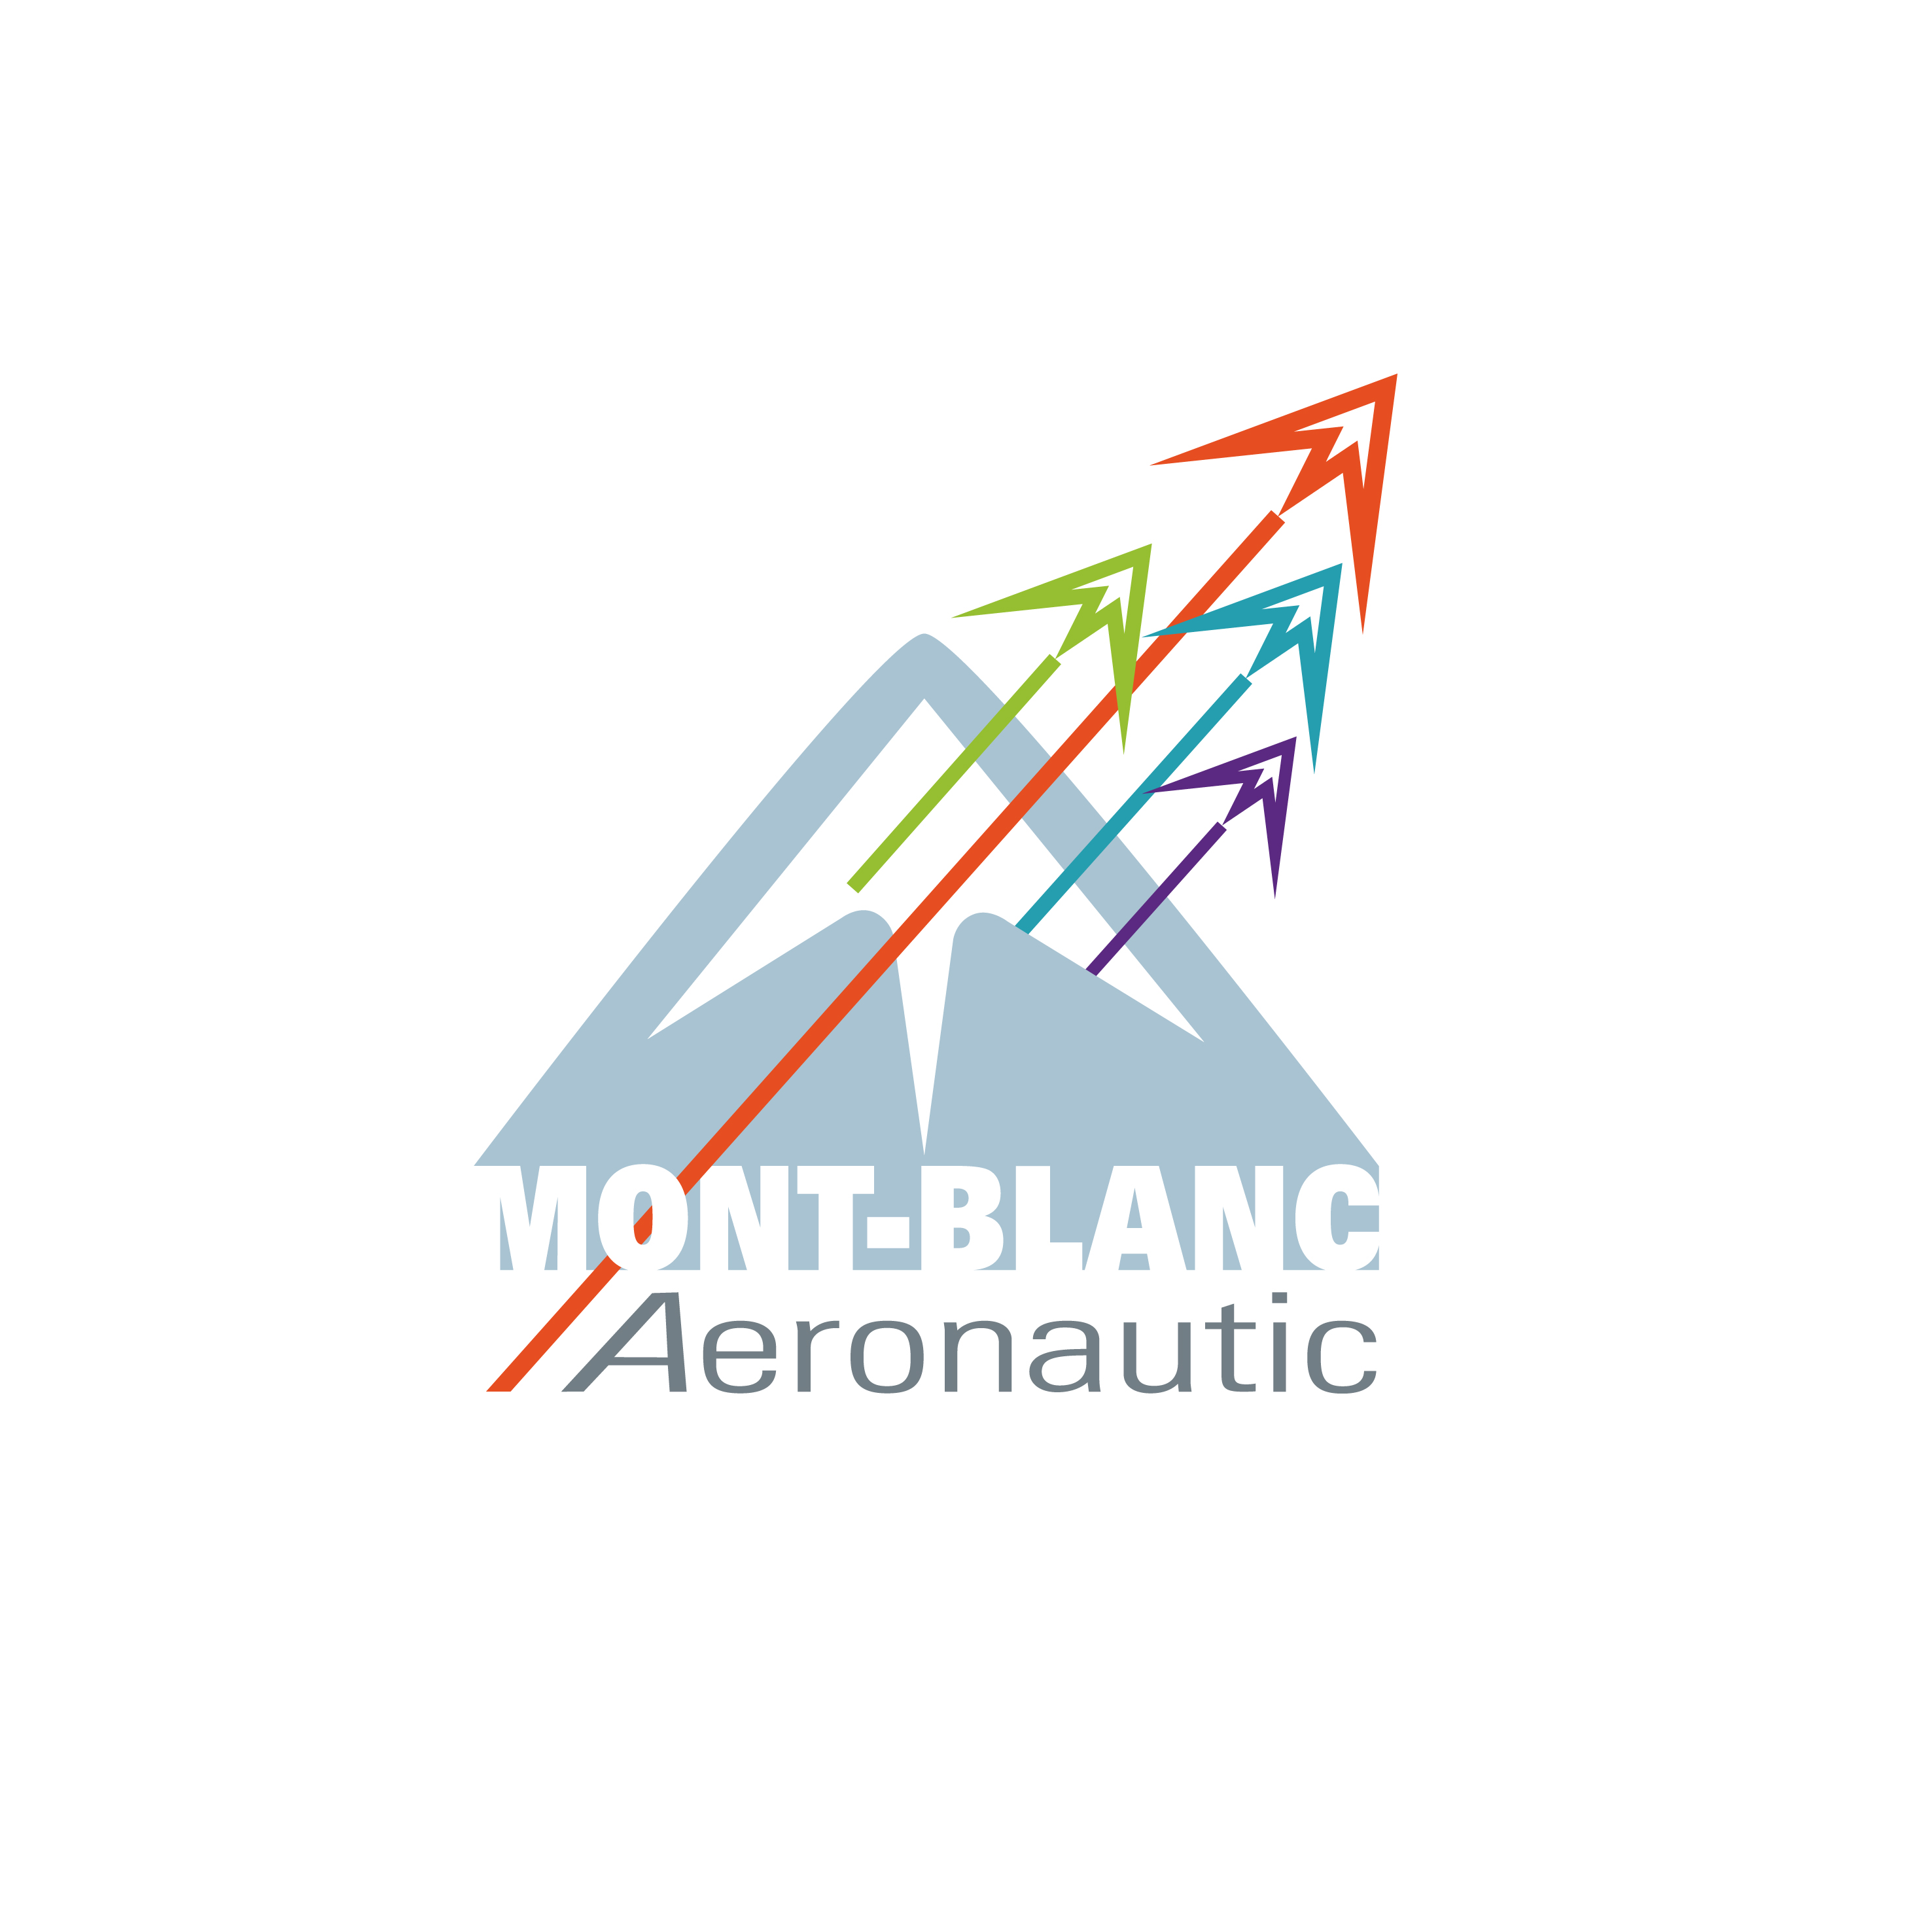 GIE Mont-Blanc Aeronautic